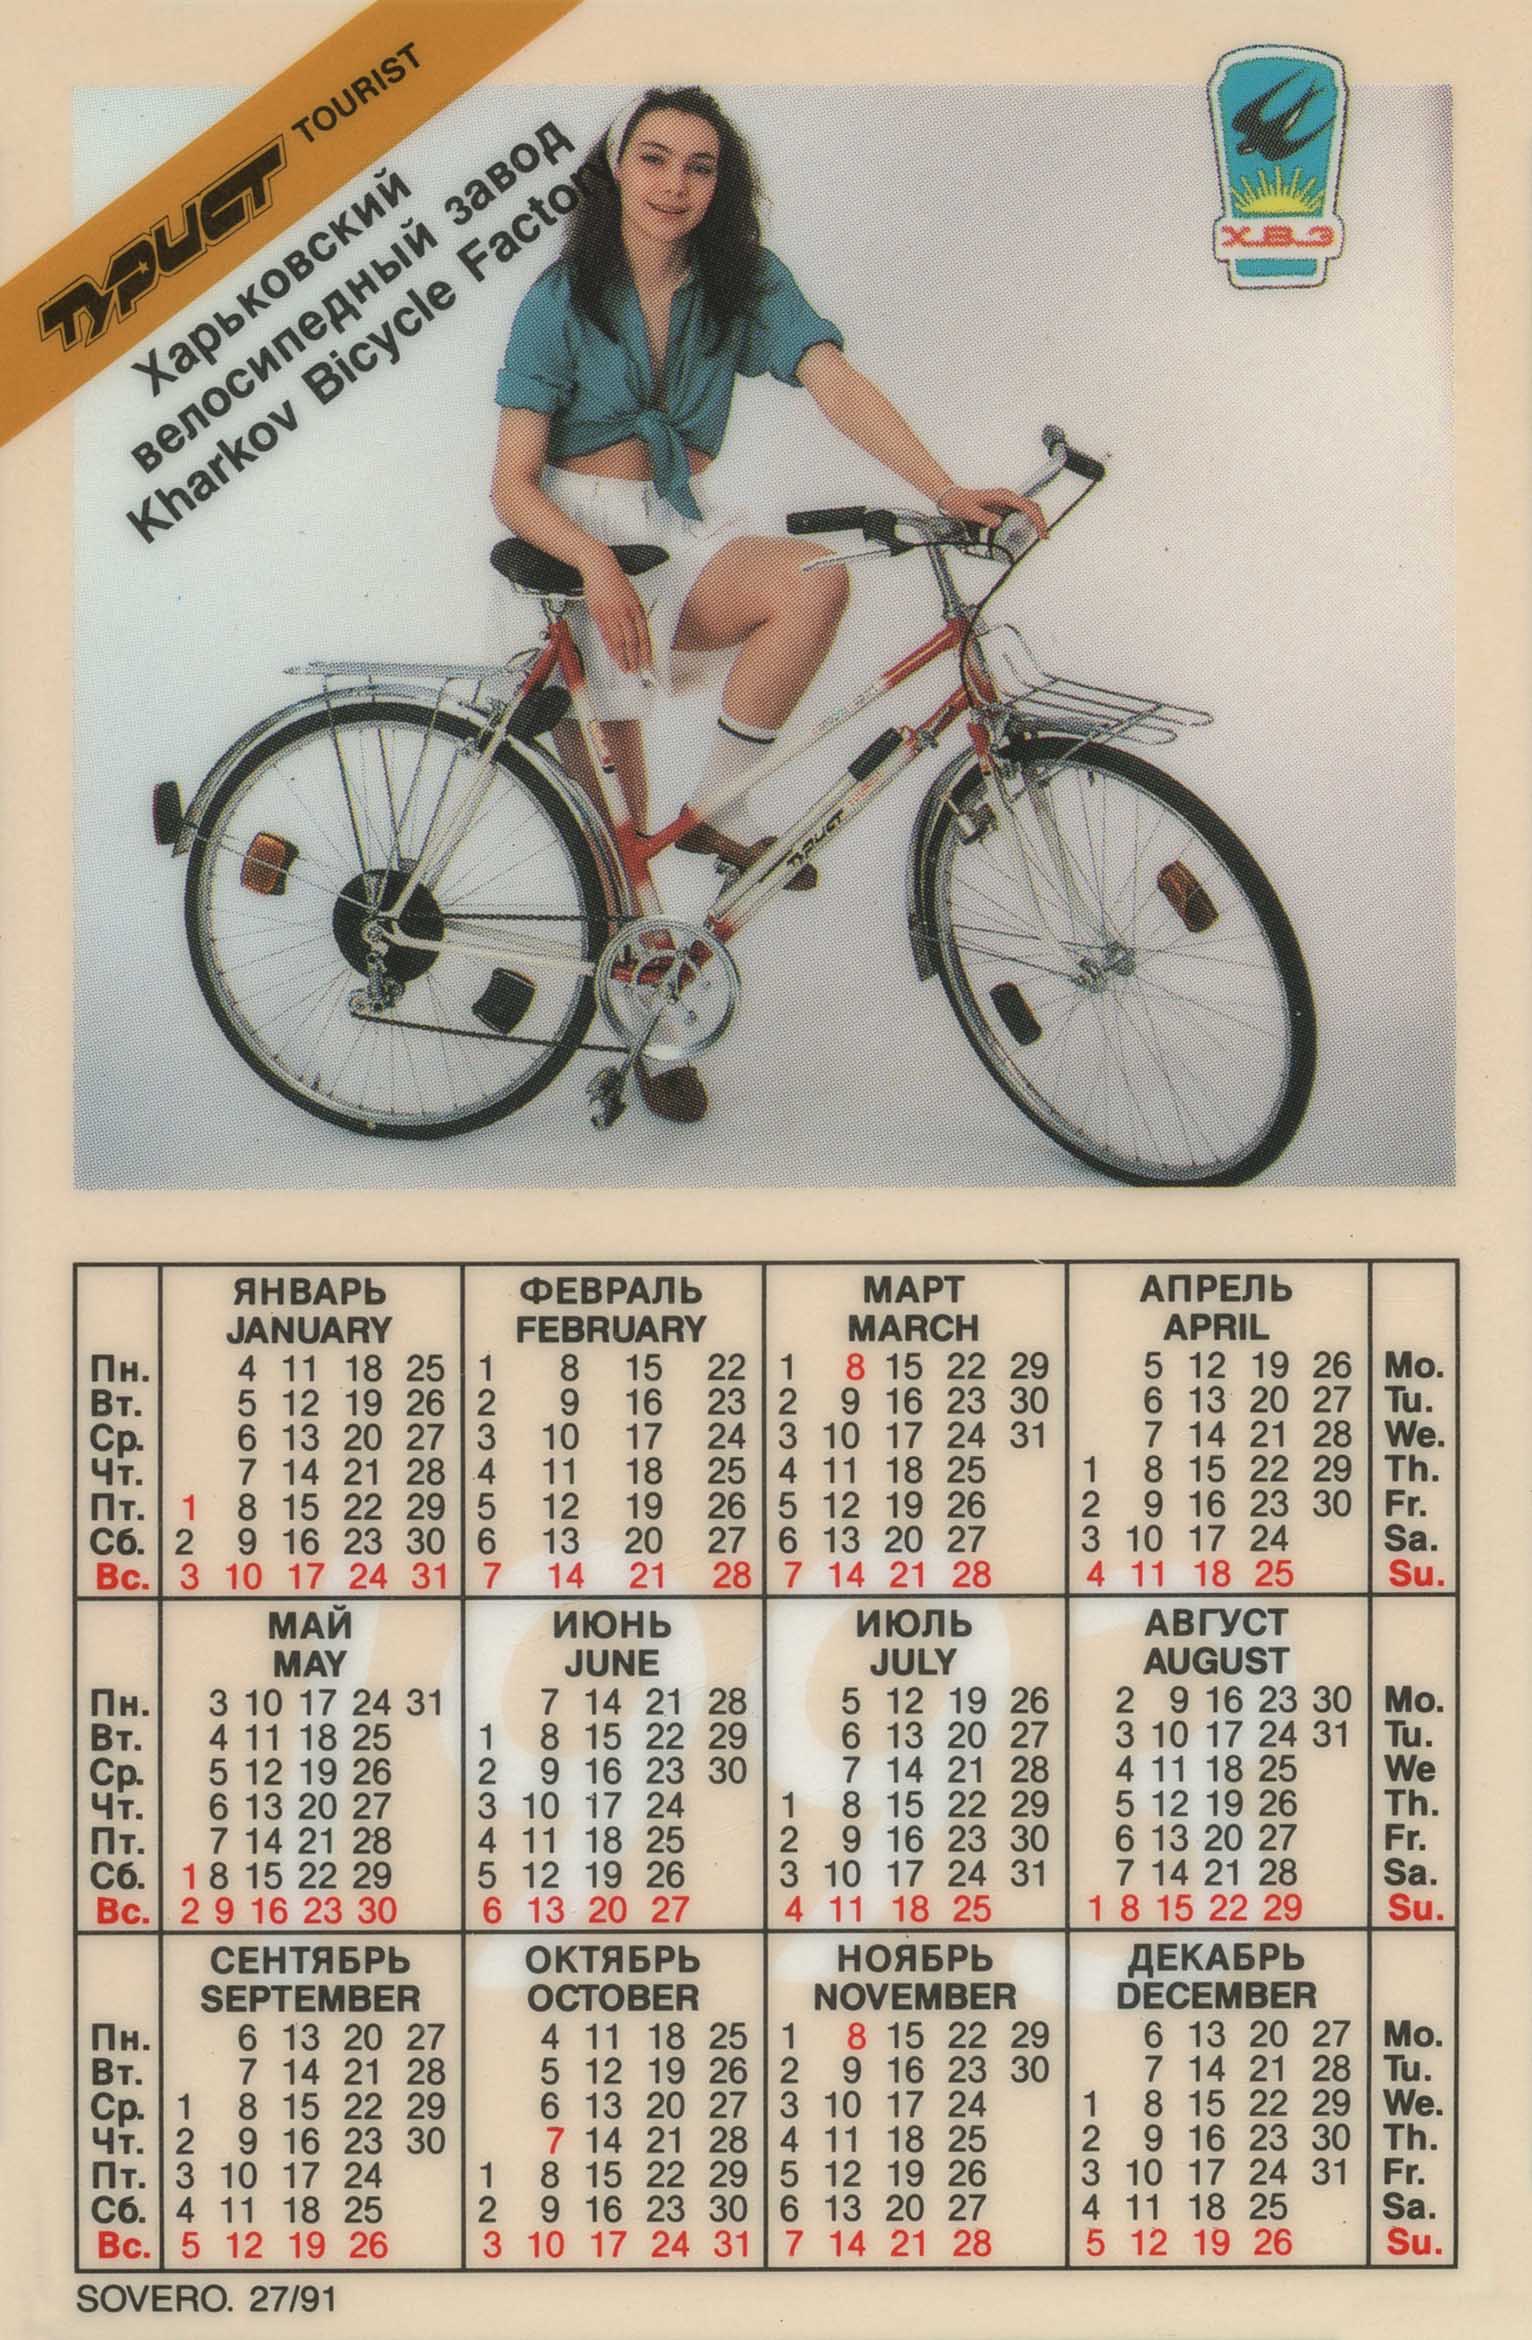 Kharkov calendar 1992/1993 - Sport & Turist (2nd style) scan 2 main image